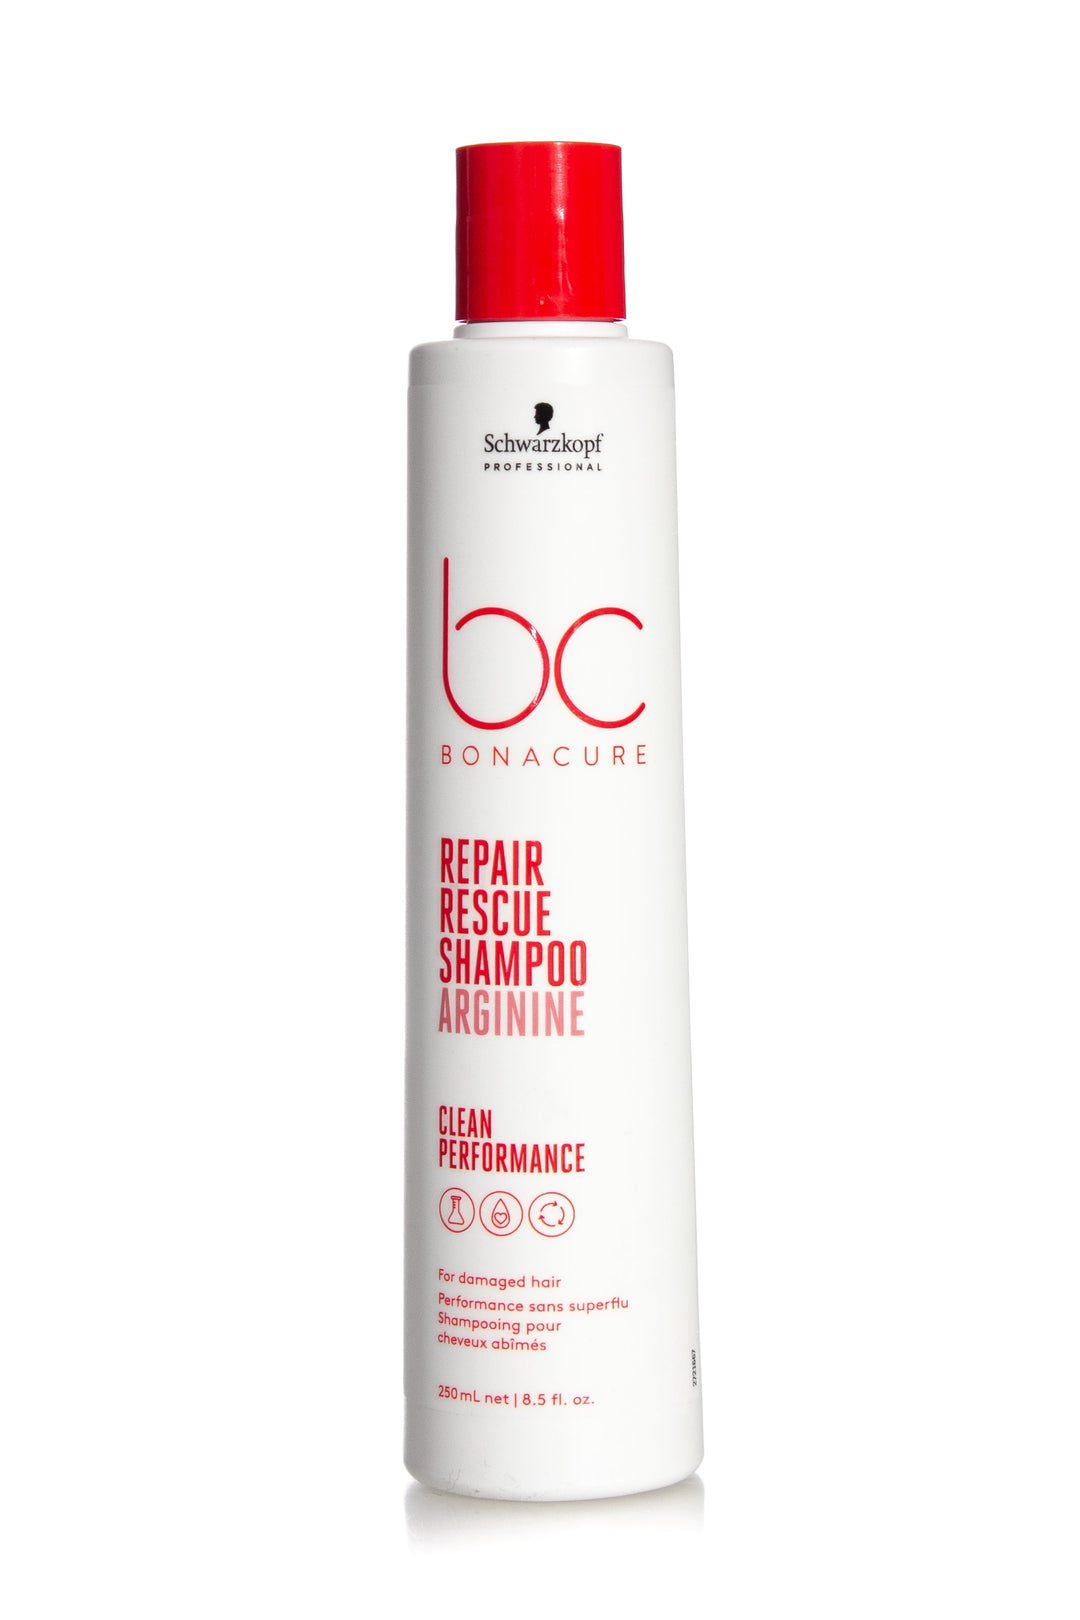 SCHWARZKOPF Bonacure Clean Performance Repair Rescue Shampoo | 250ml